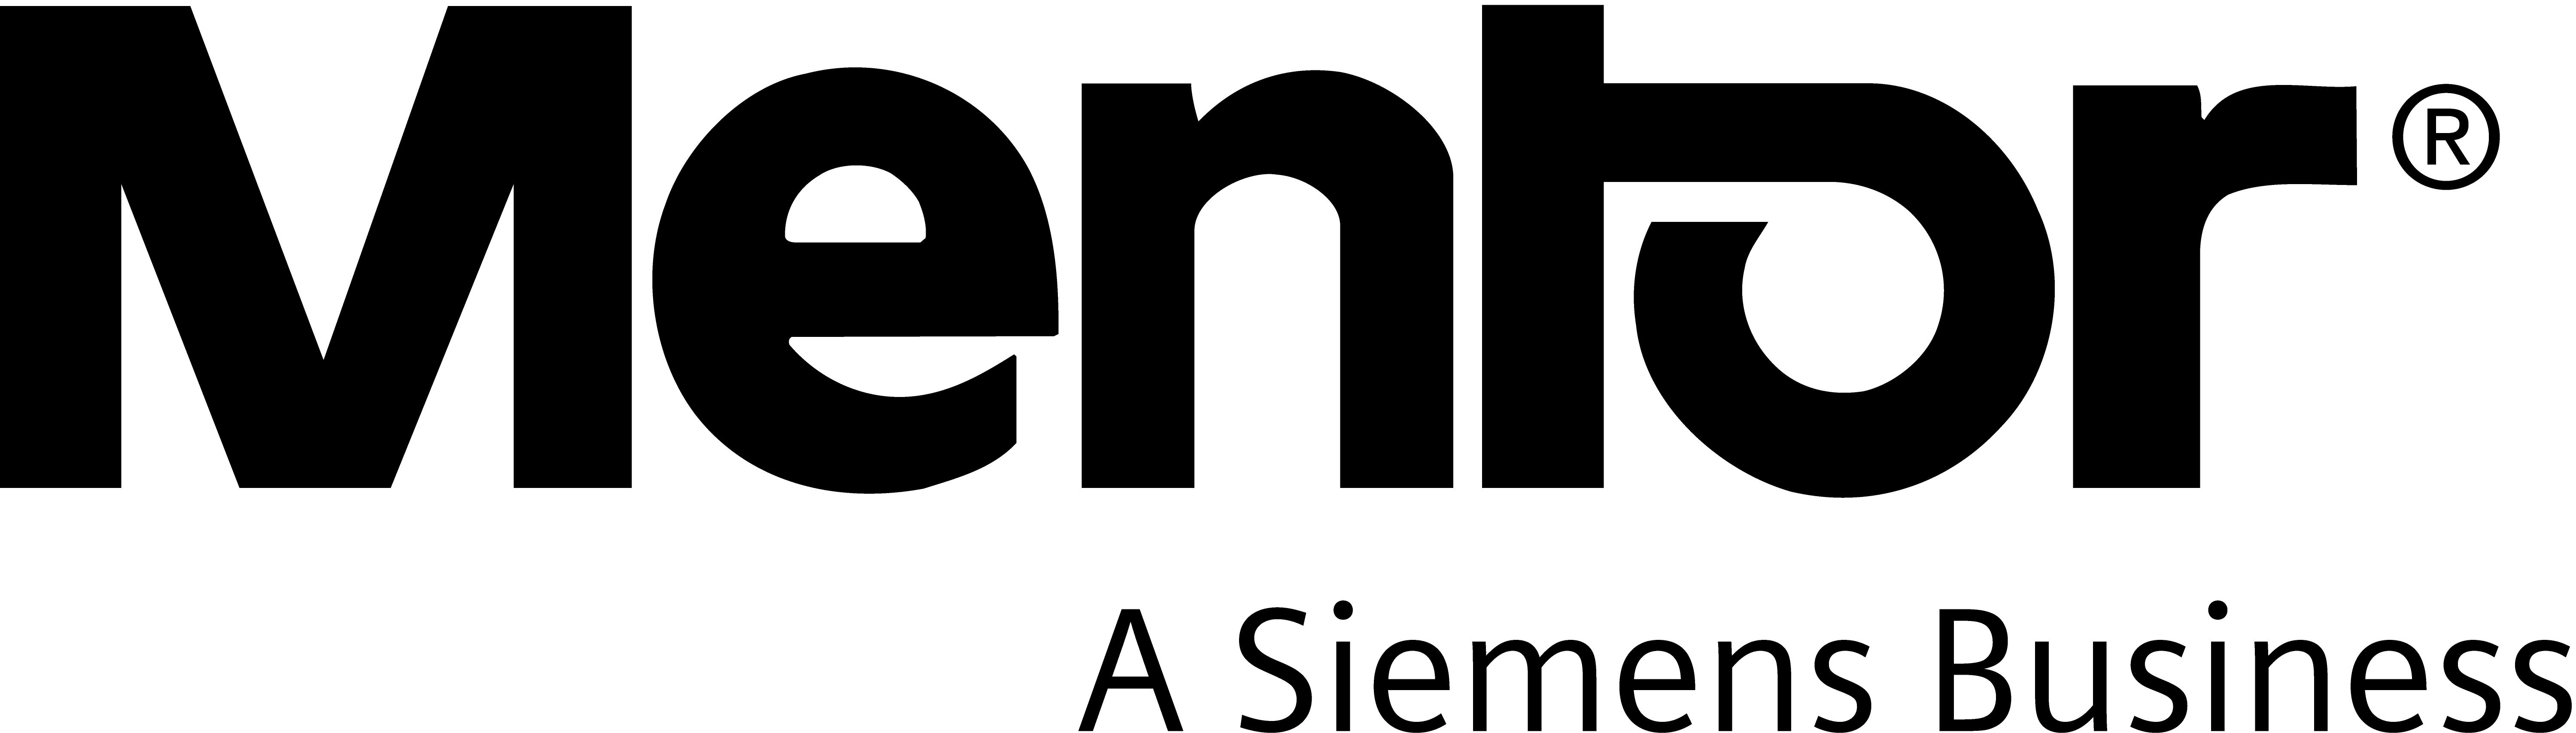 Mentor Siemens Logo